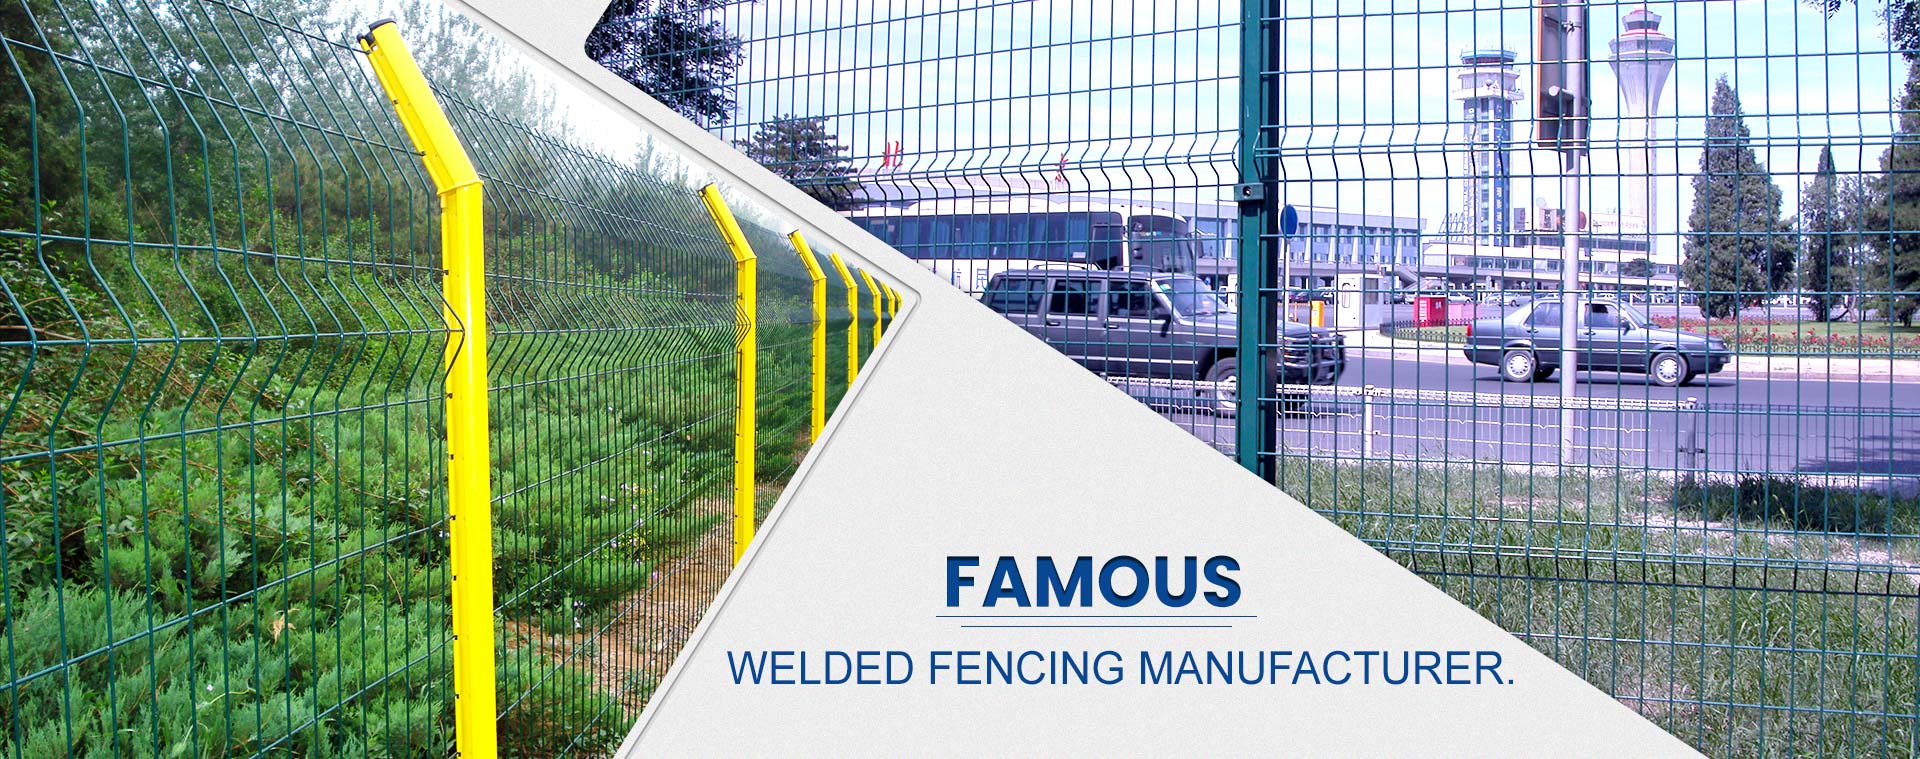 Famous Welded Fencing Manufacturer.